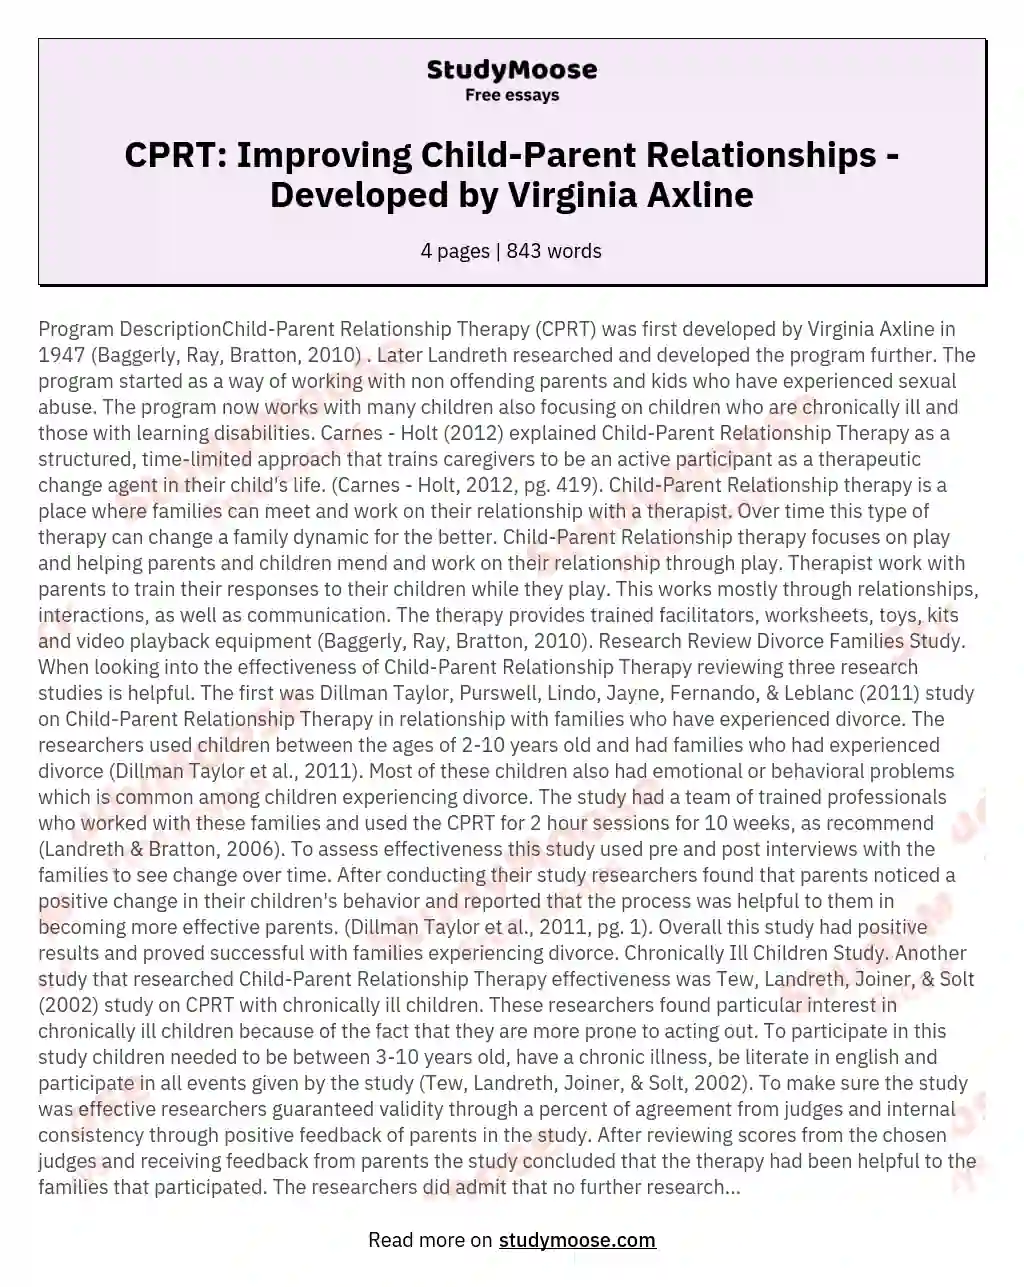 CPRT: Improving Child-Parent Relationships - Developed by Virginia Axline essay